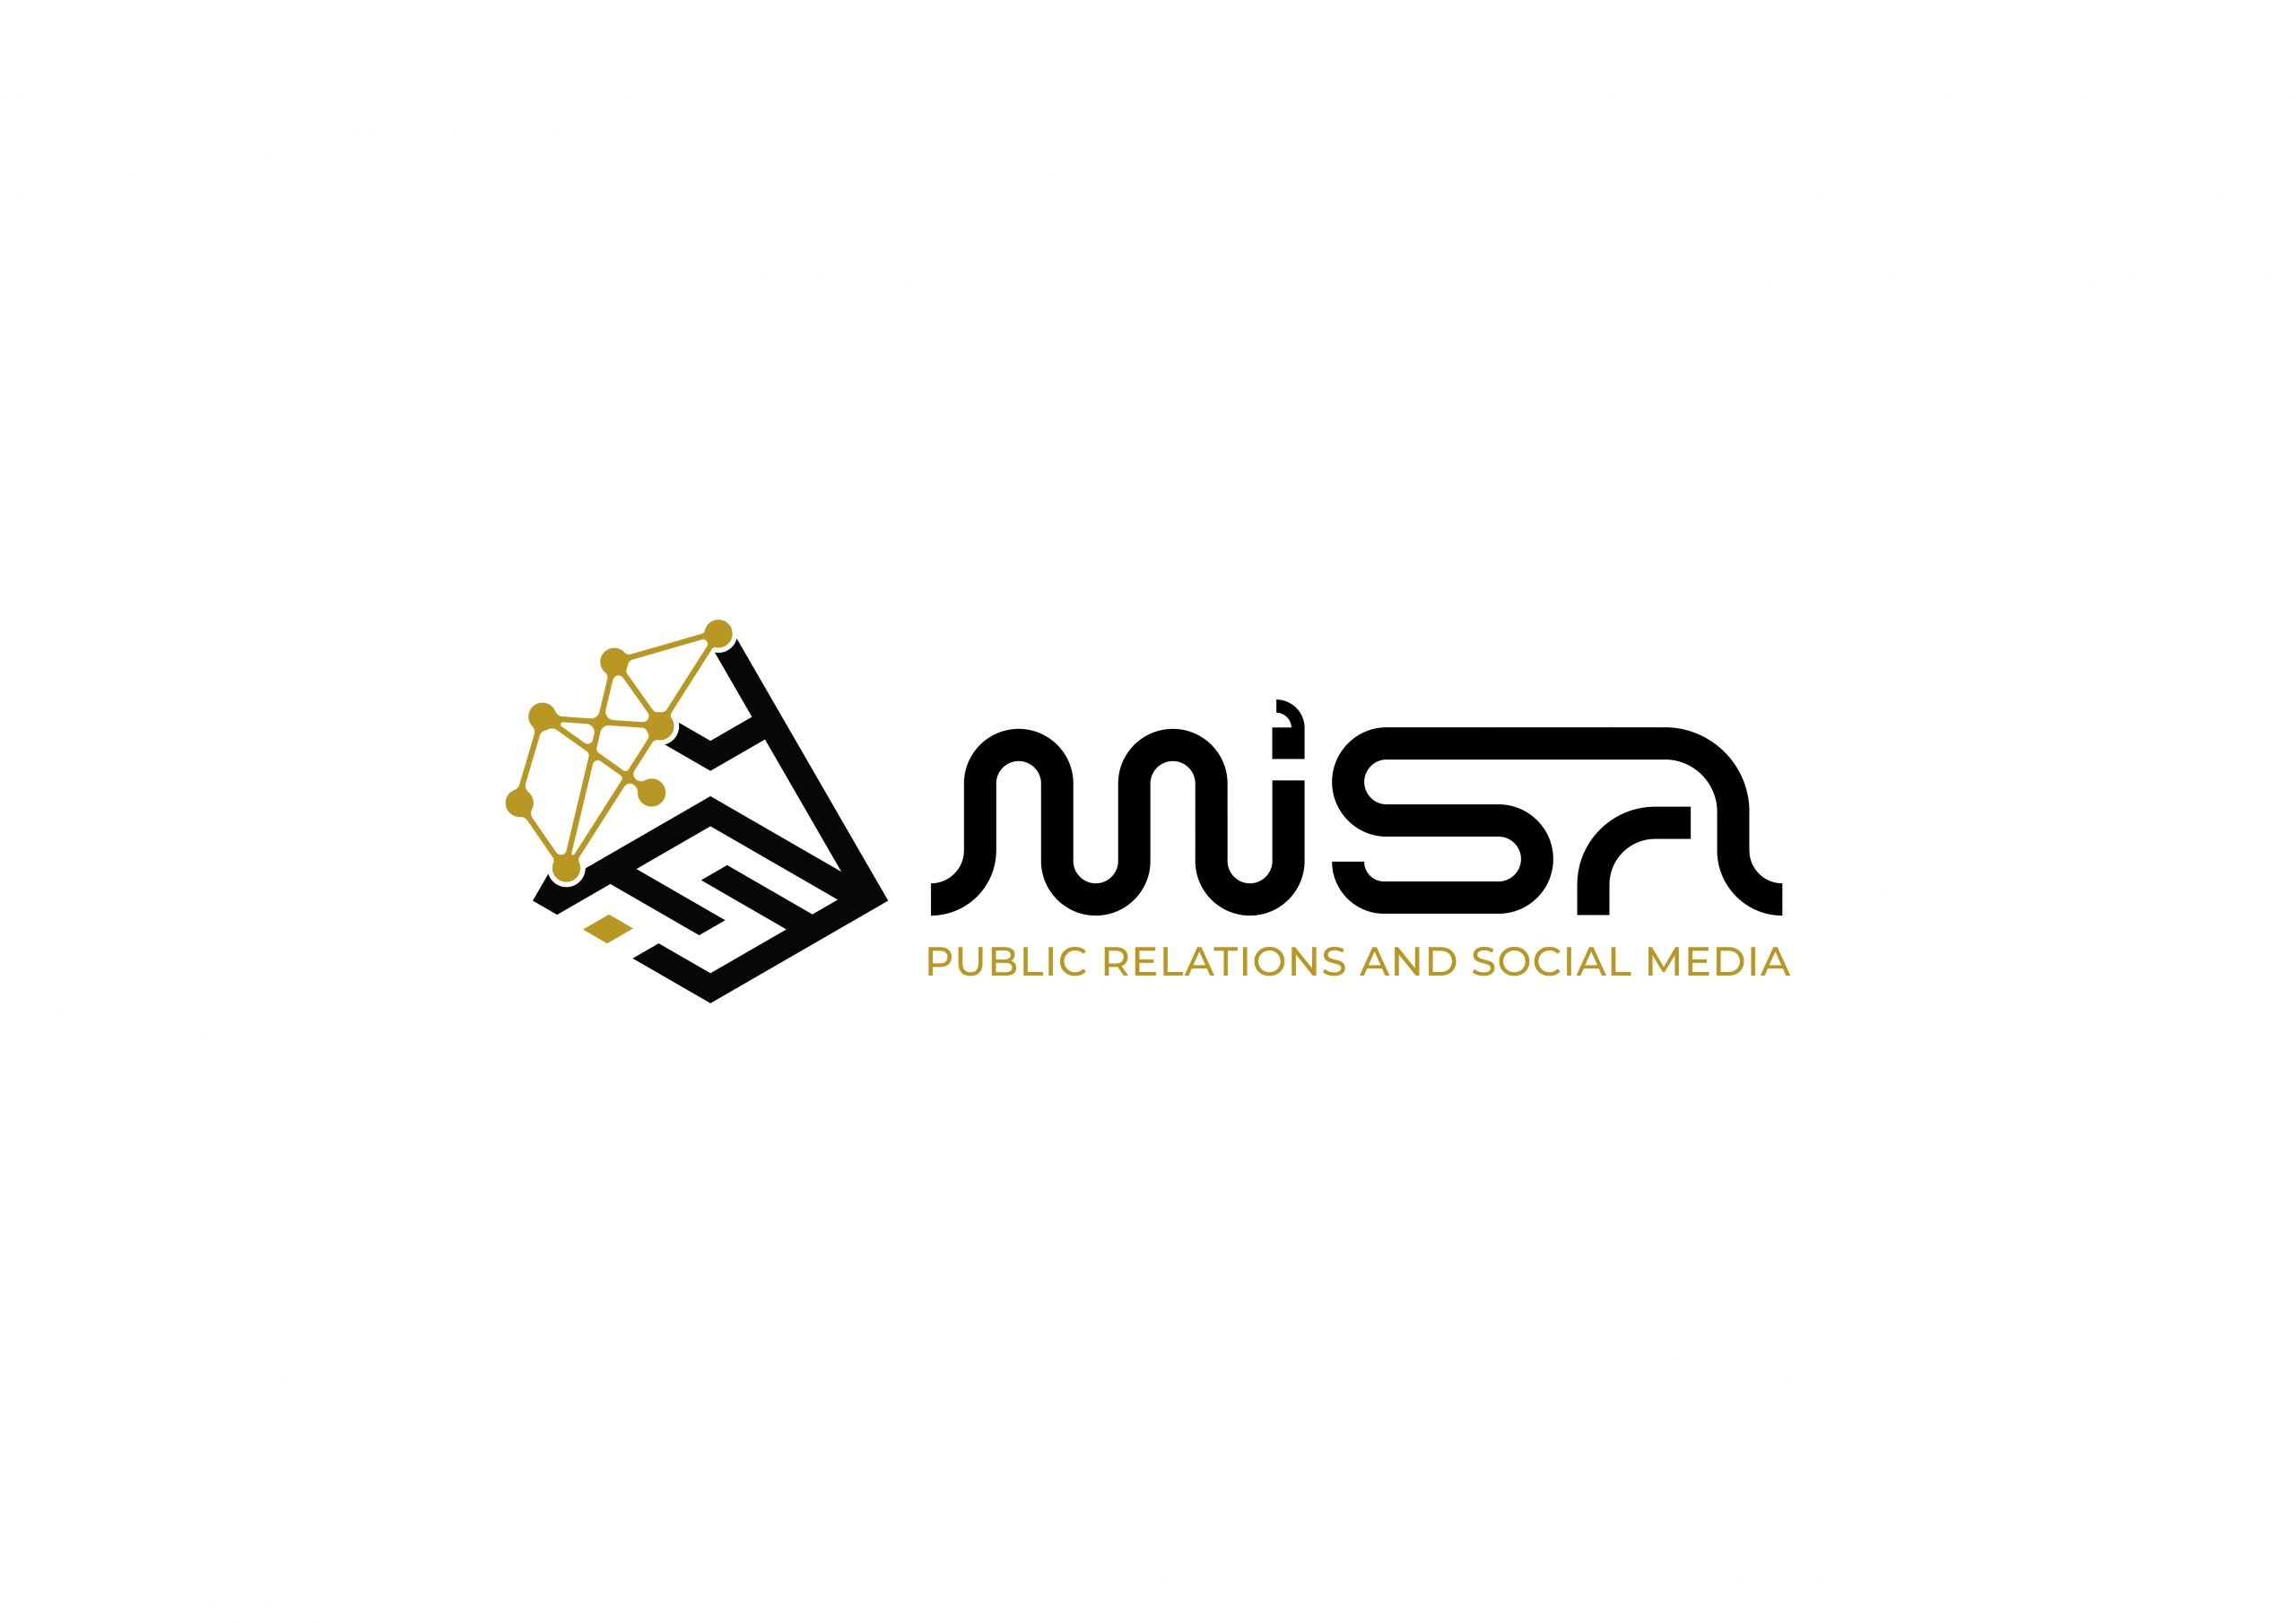 MISA Public Relations and Social Media